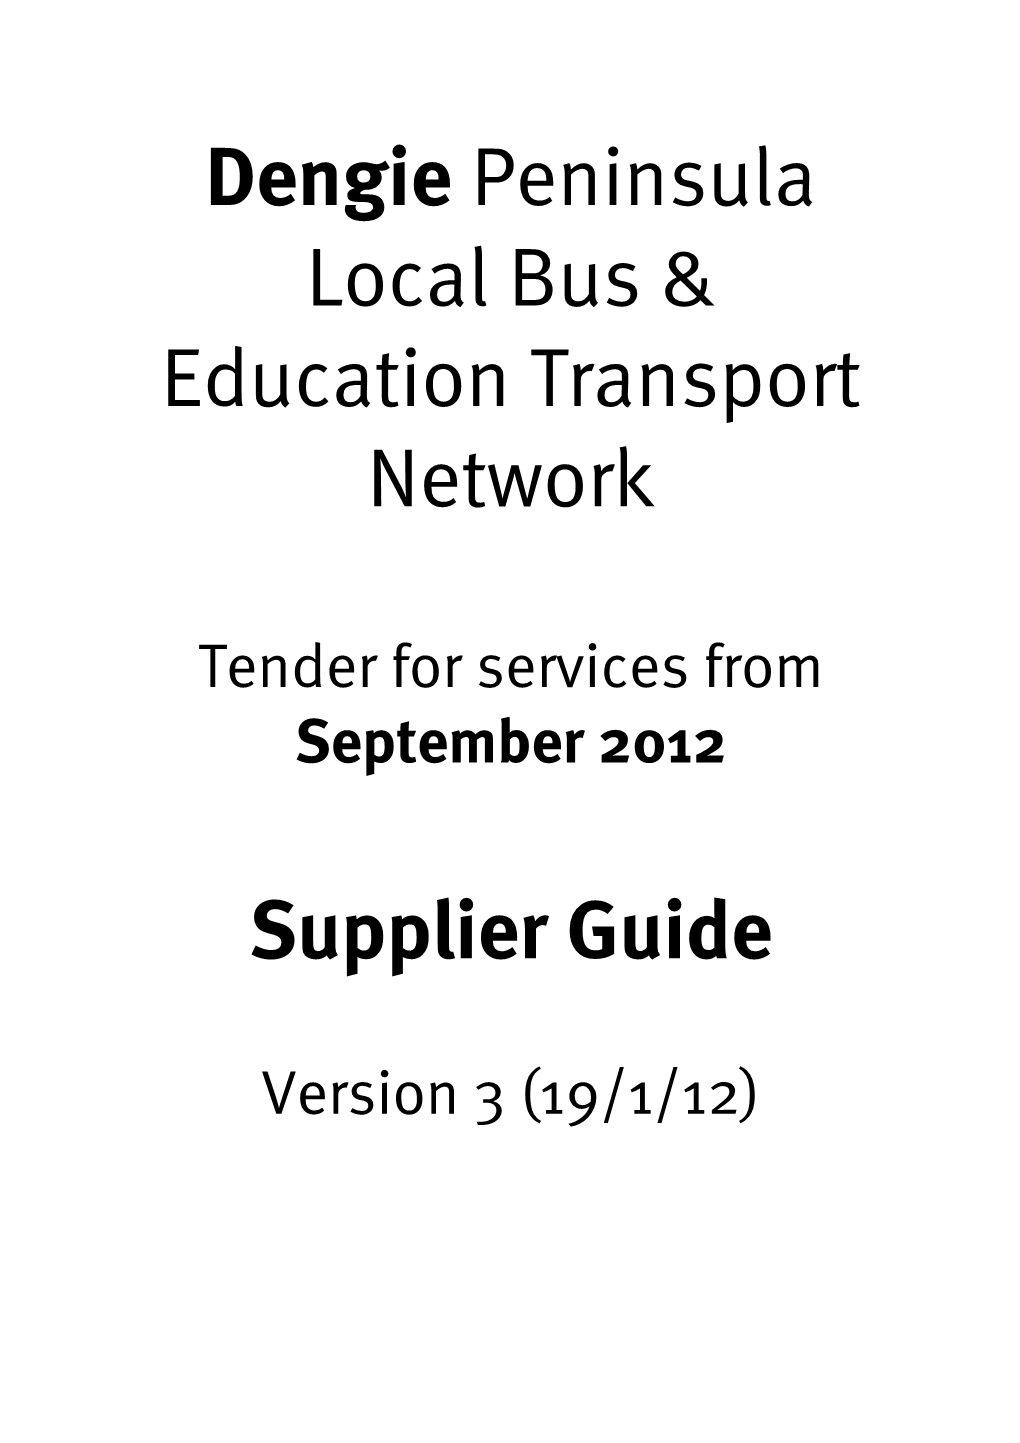 Dengie Peninsula Local Bus & Education Transport Network